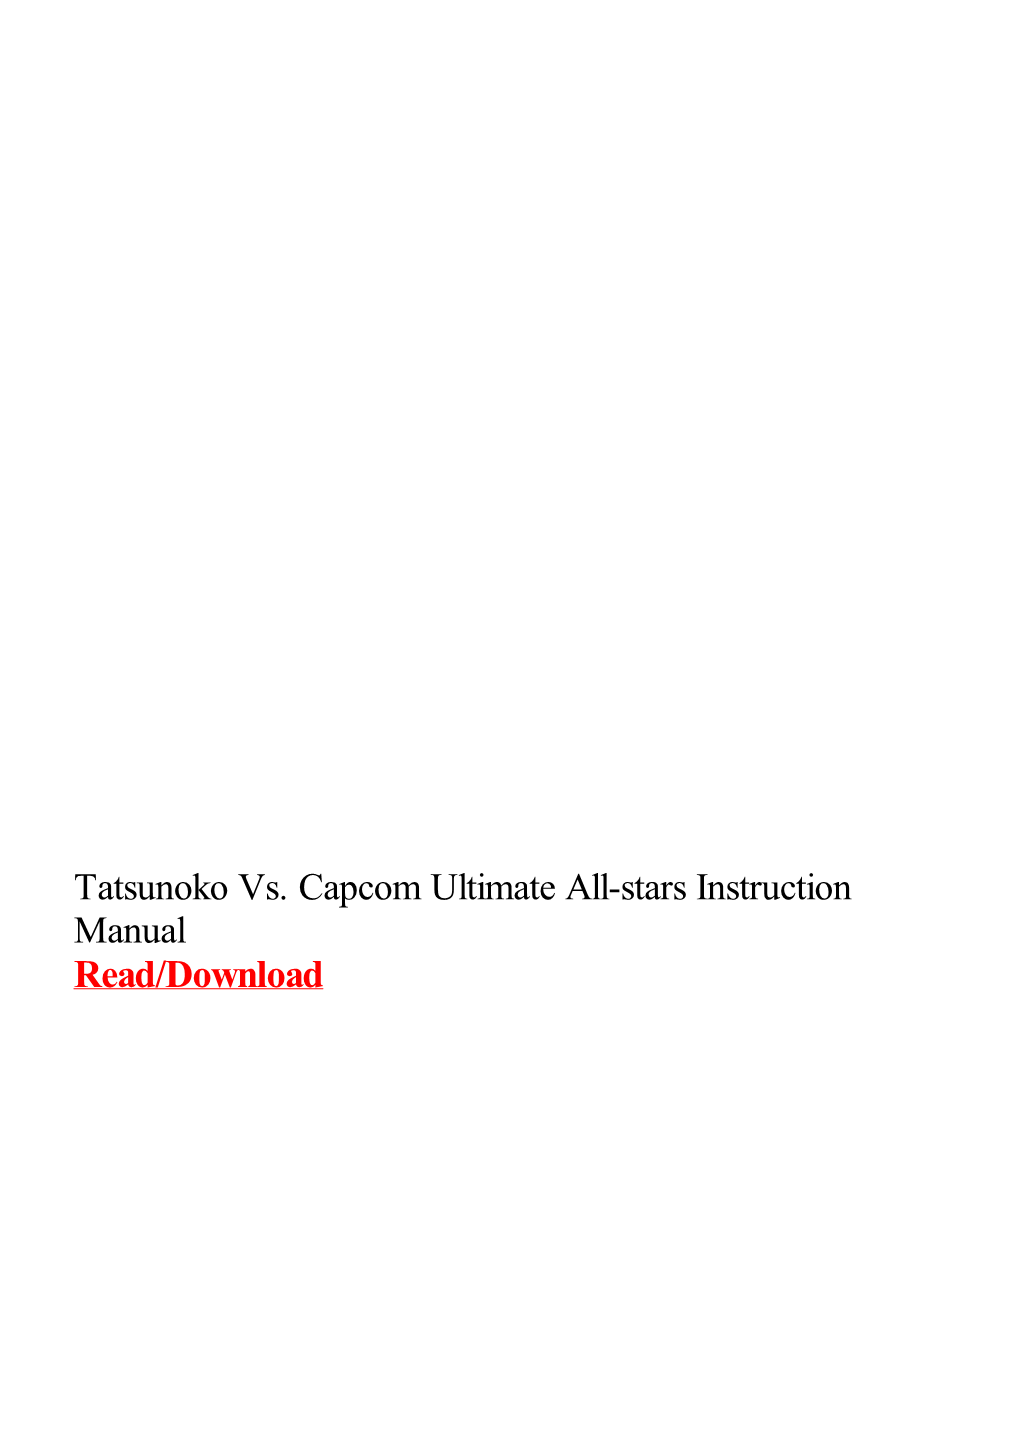 Tatsunoko Vs. Capcom Ultimate All-Stars Instruction Manual Manual: Repair Manual Koch Media · Tatsunoko Vs